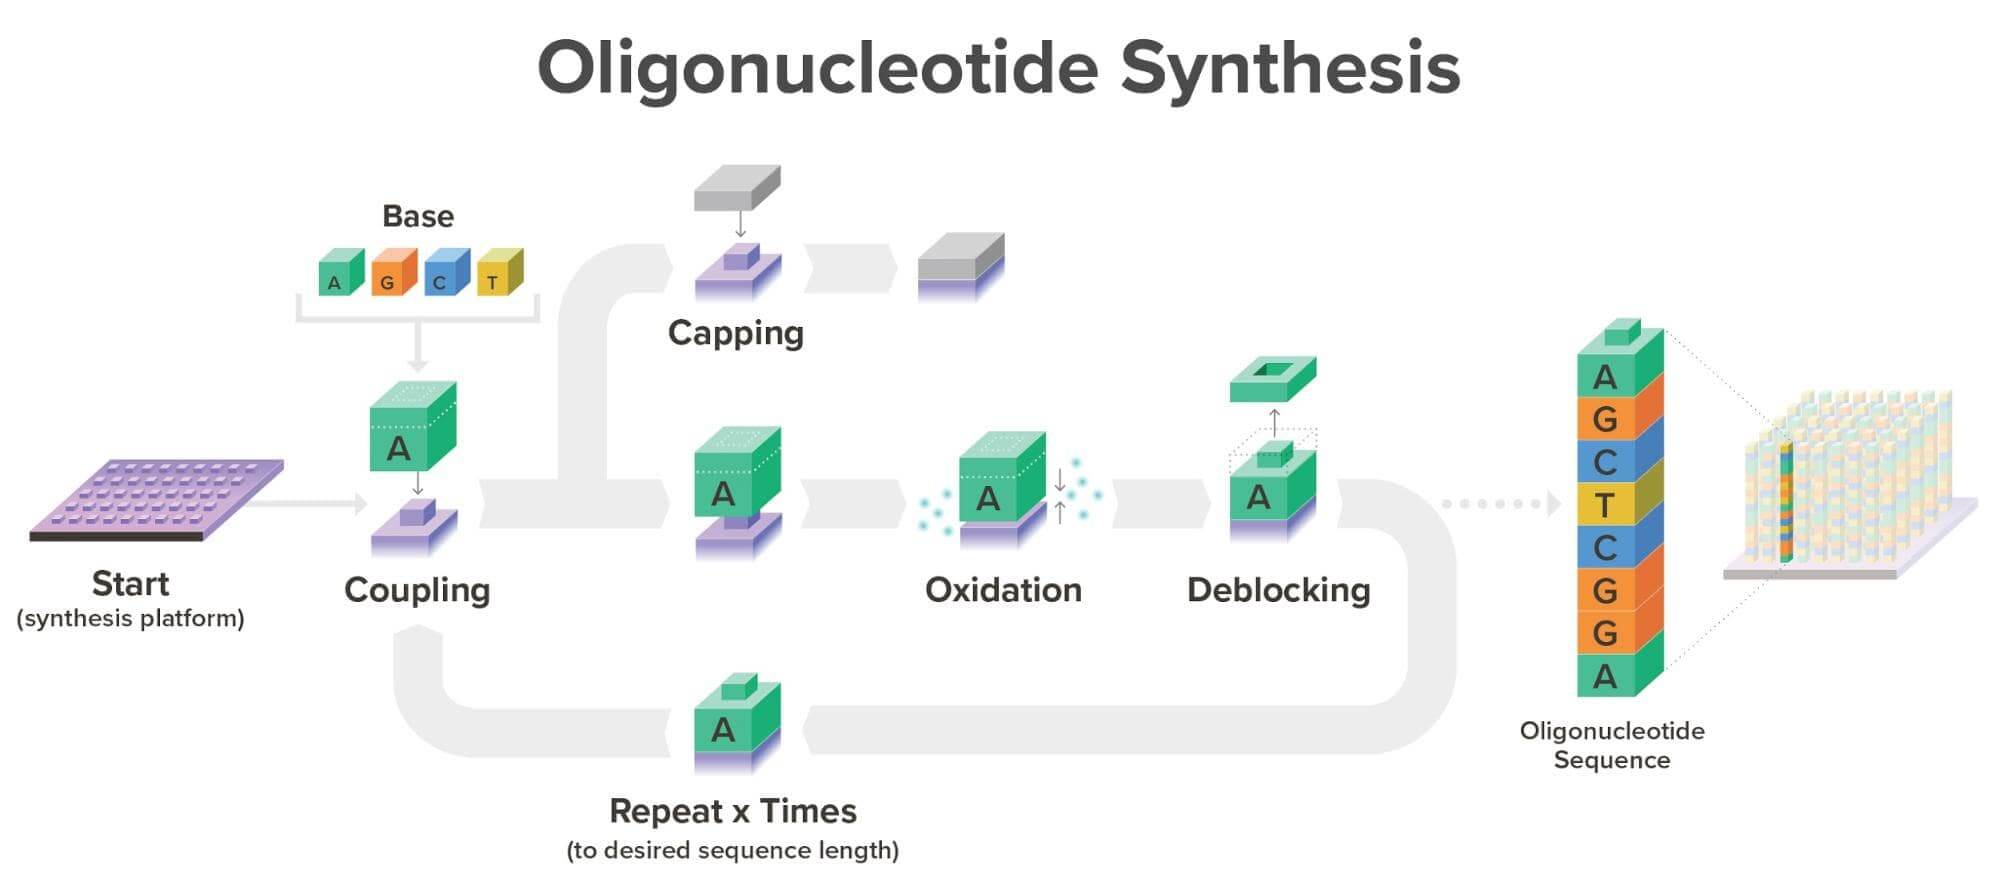 Oligonucleotide synthesis using Twist's silicon platform and phosphoramidite chemistry